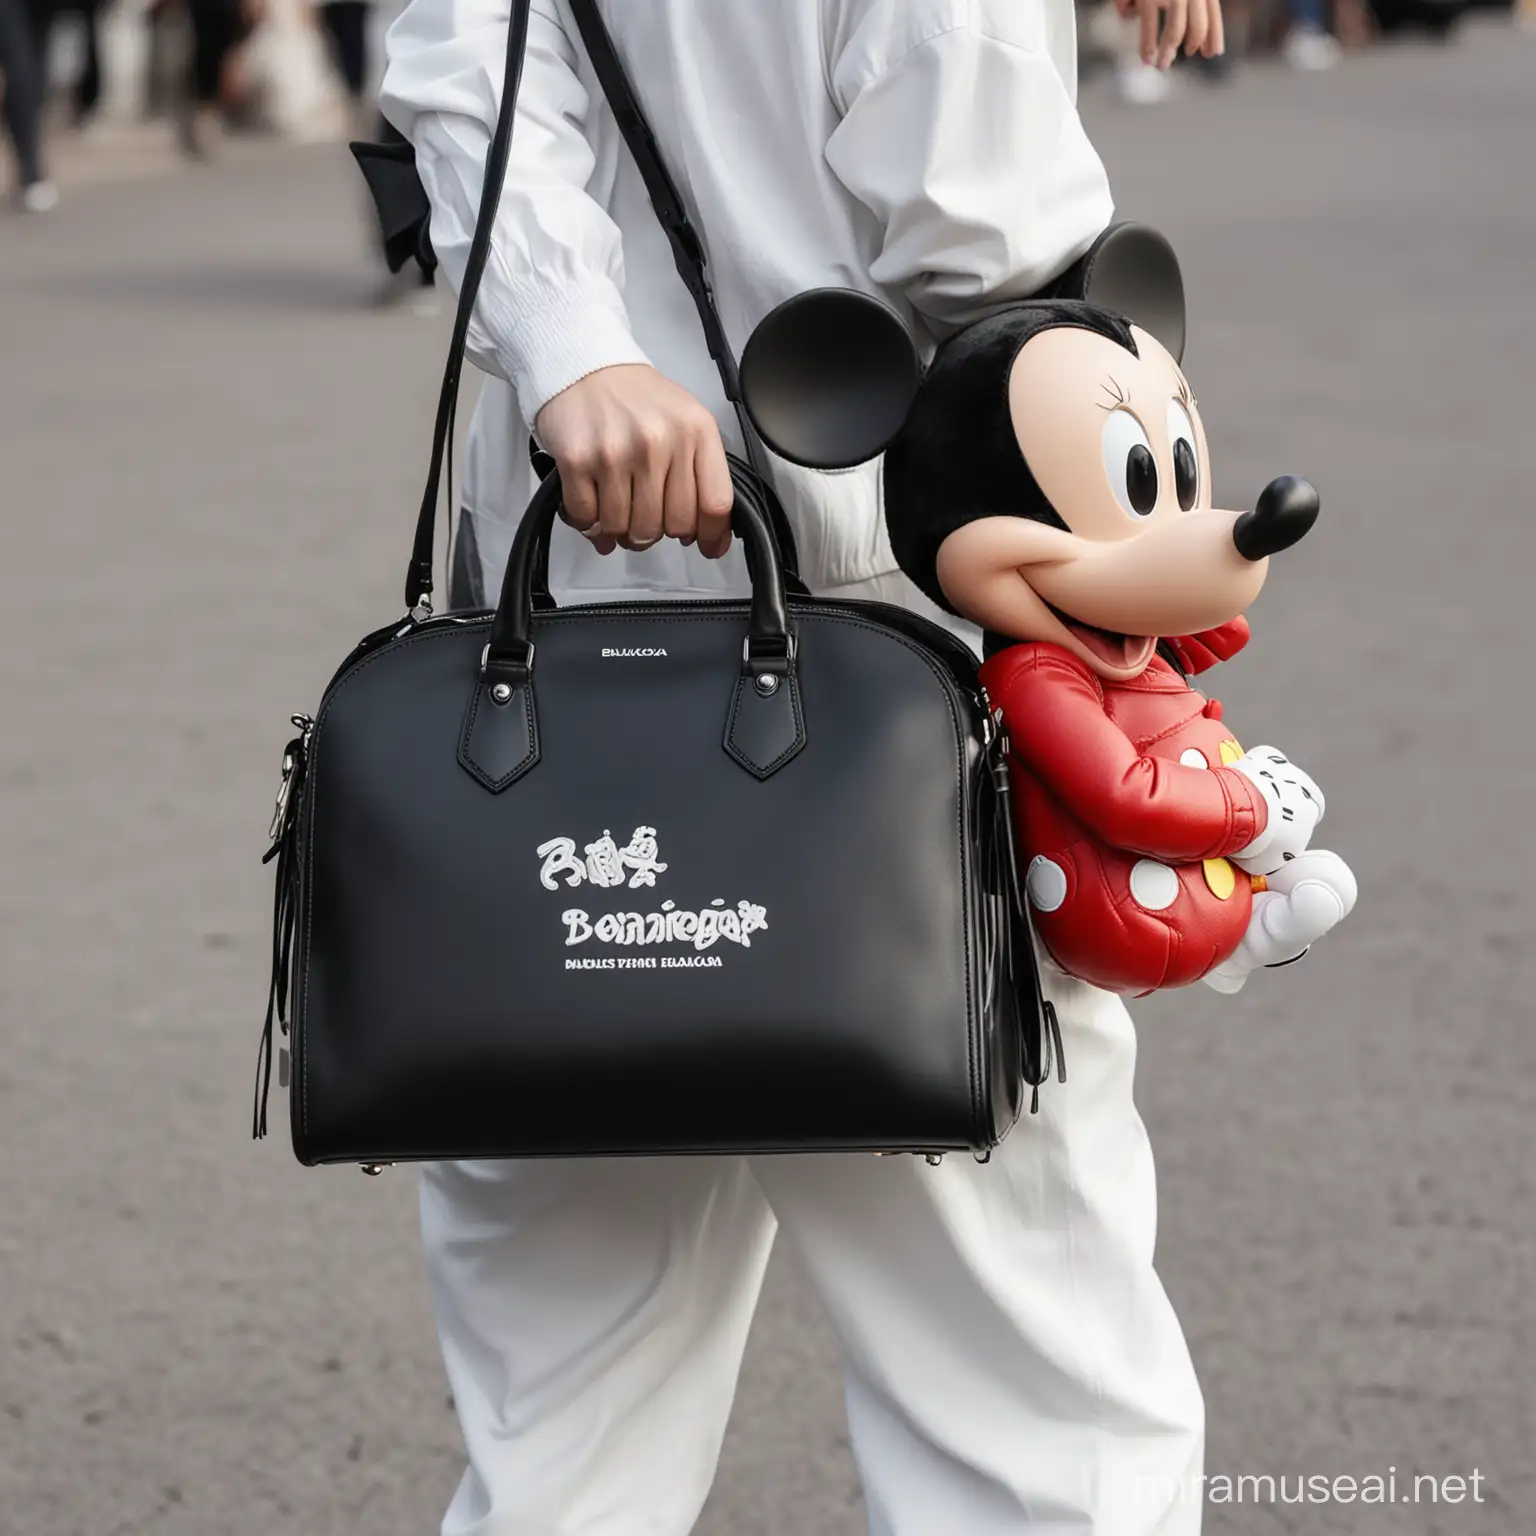 Cartoon Character Mickey Mouse Holding Balenciaga Bag